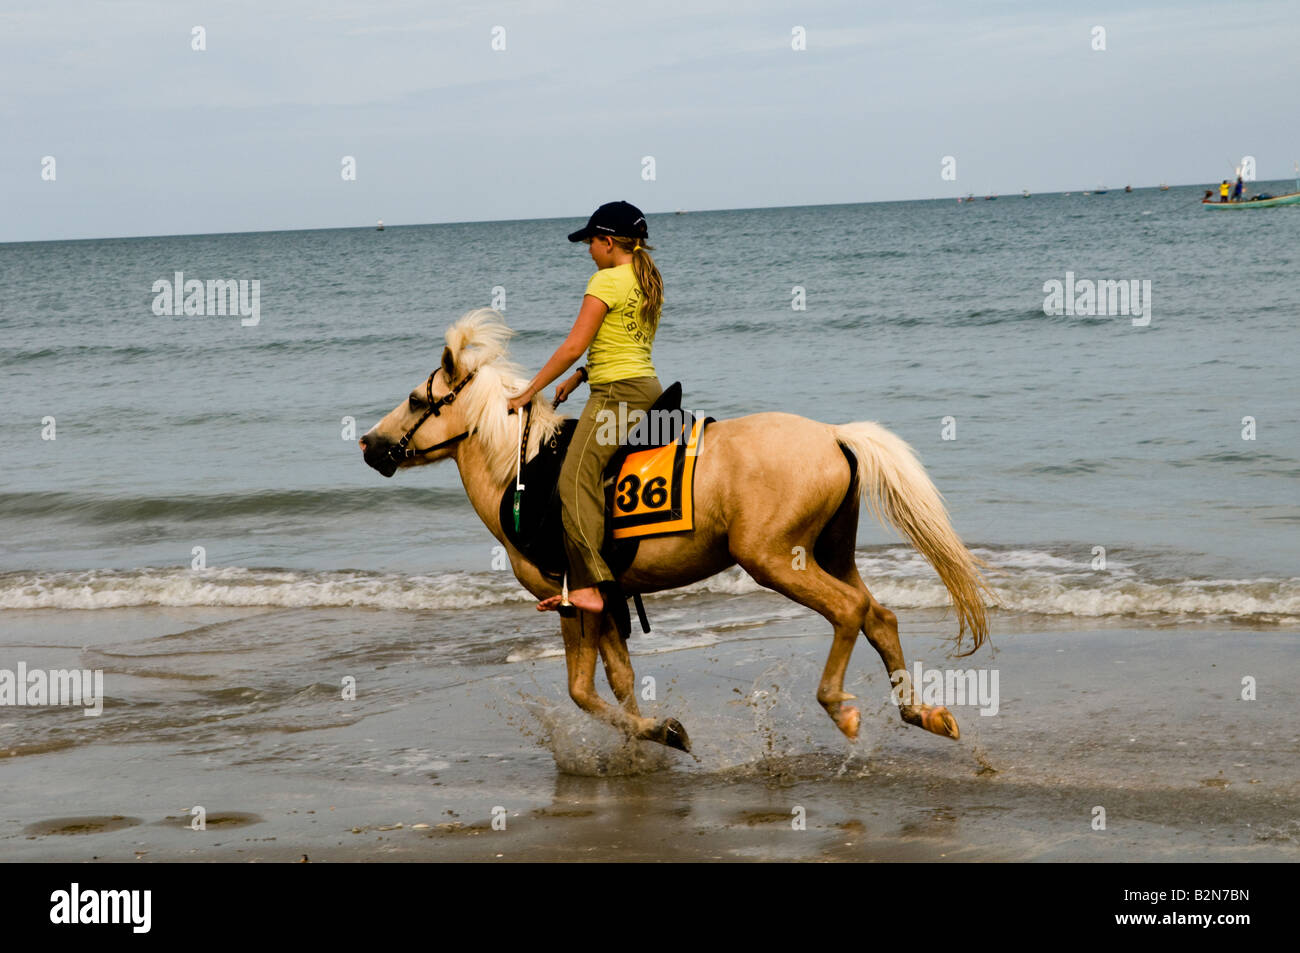 Horse riding on a tropical beach, Thailand Stock Photo